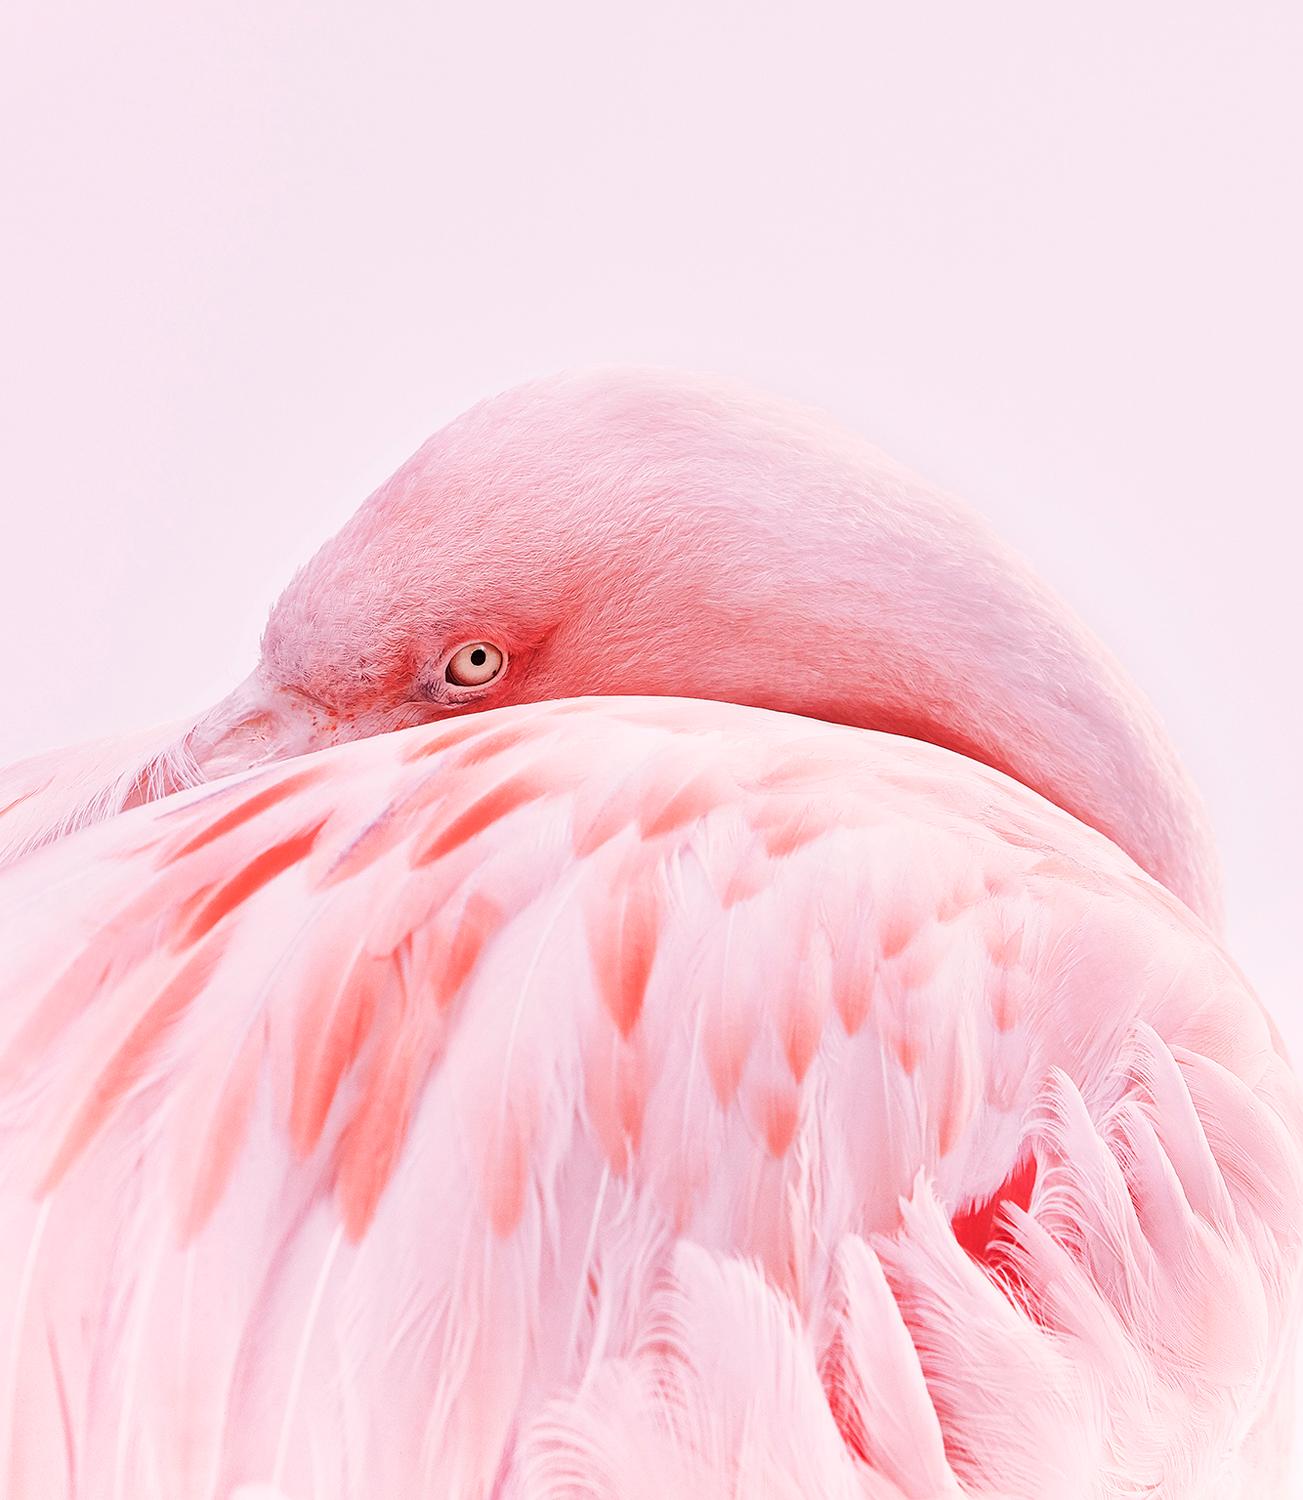 Flamingo No. 1 - Photograph by Chris Gordaneer